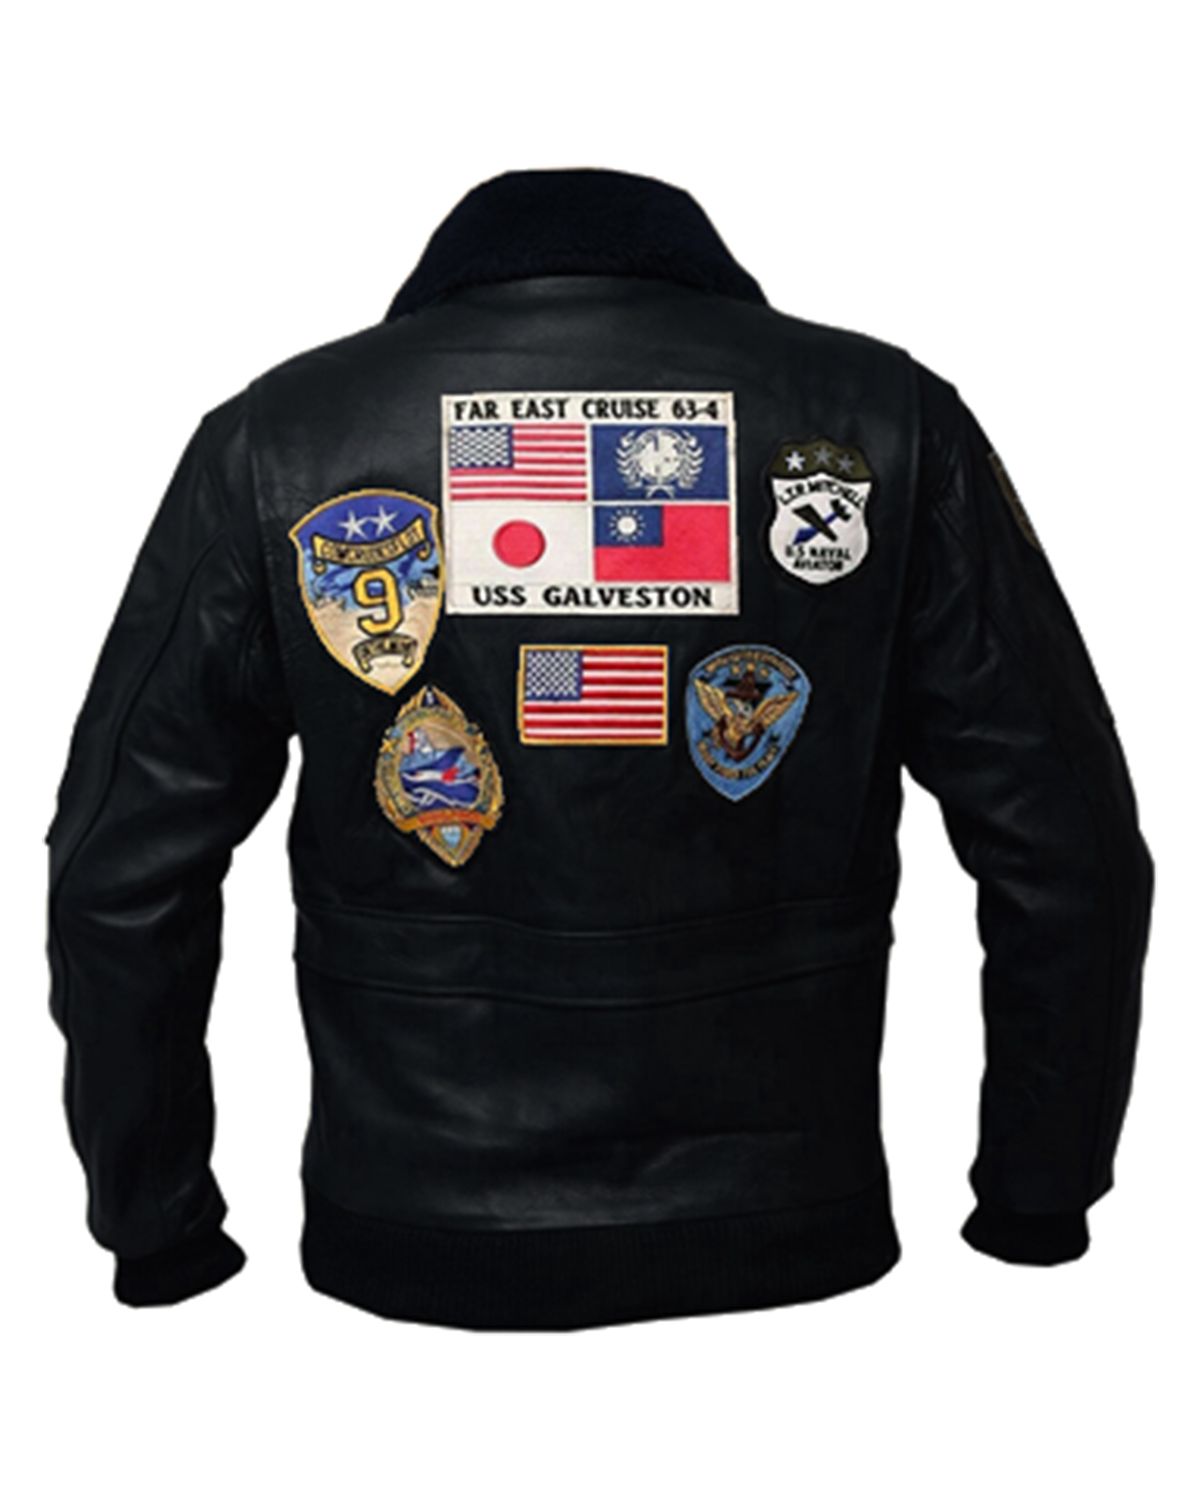 tom cruise jacket men top gun leather jacket men black leather jacket men bomber jacket men genuine leather jacket men